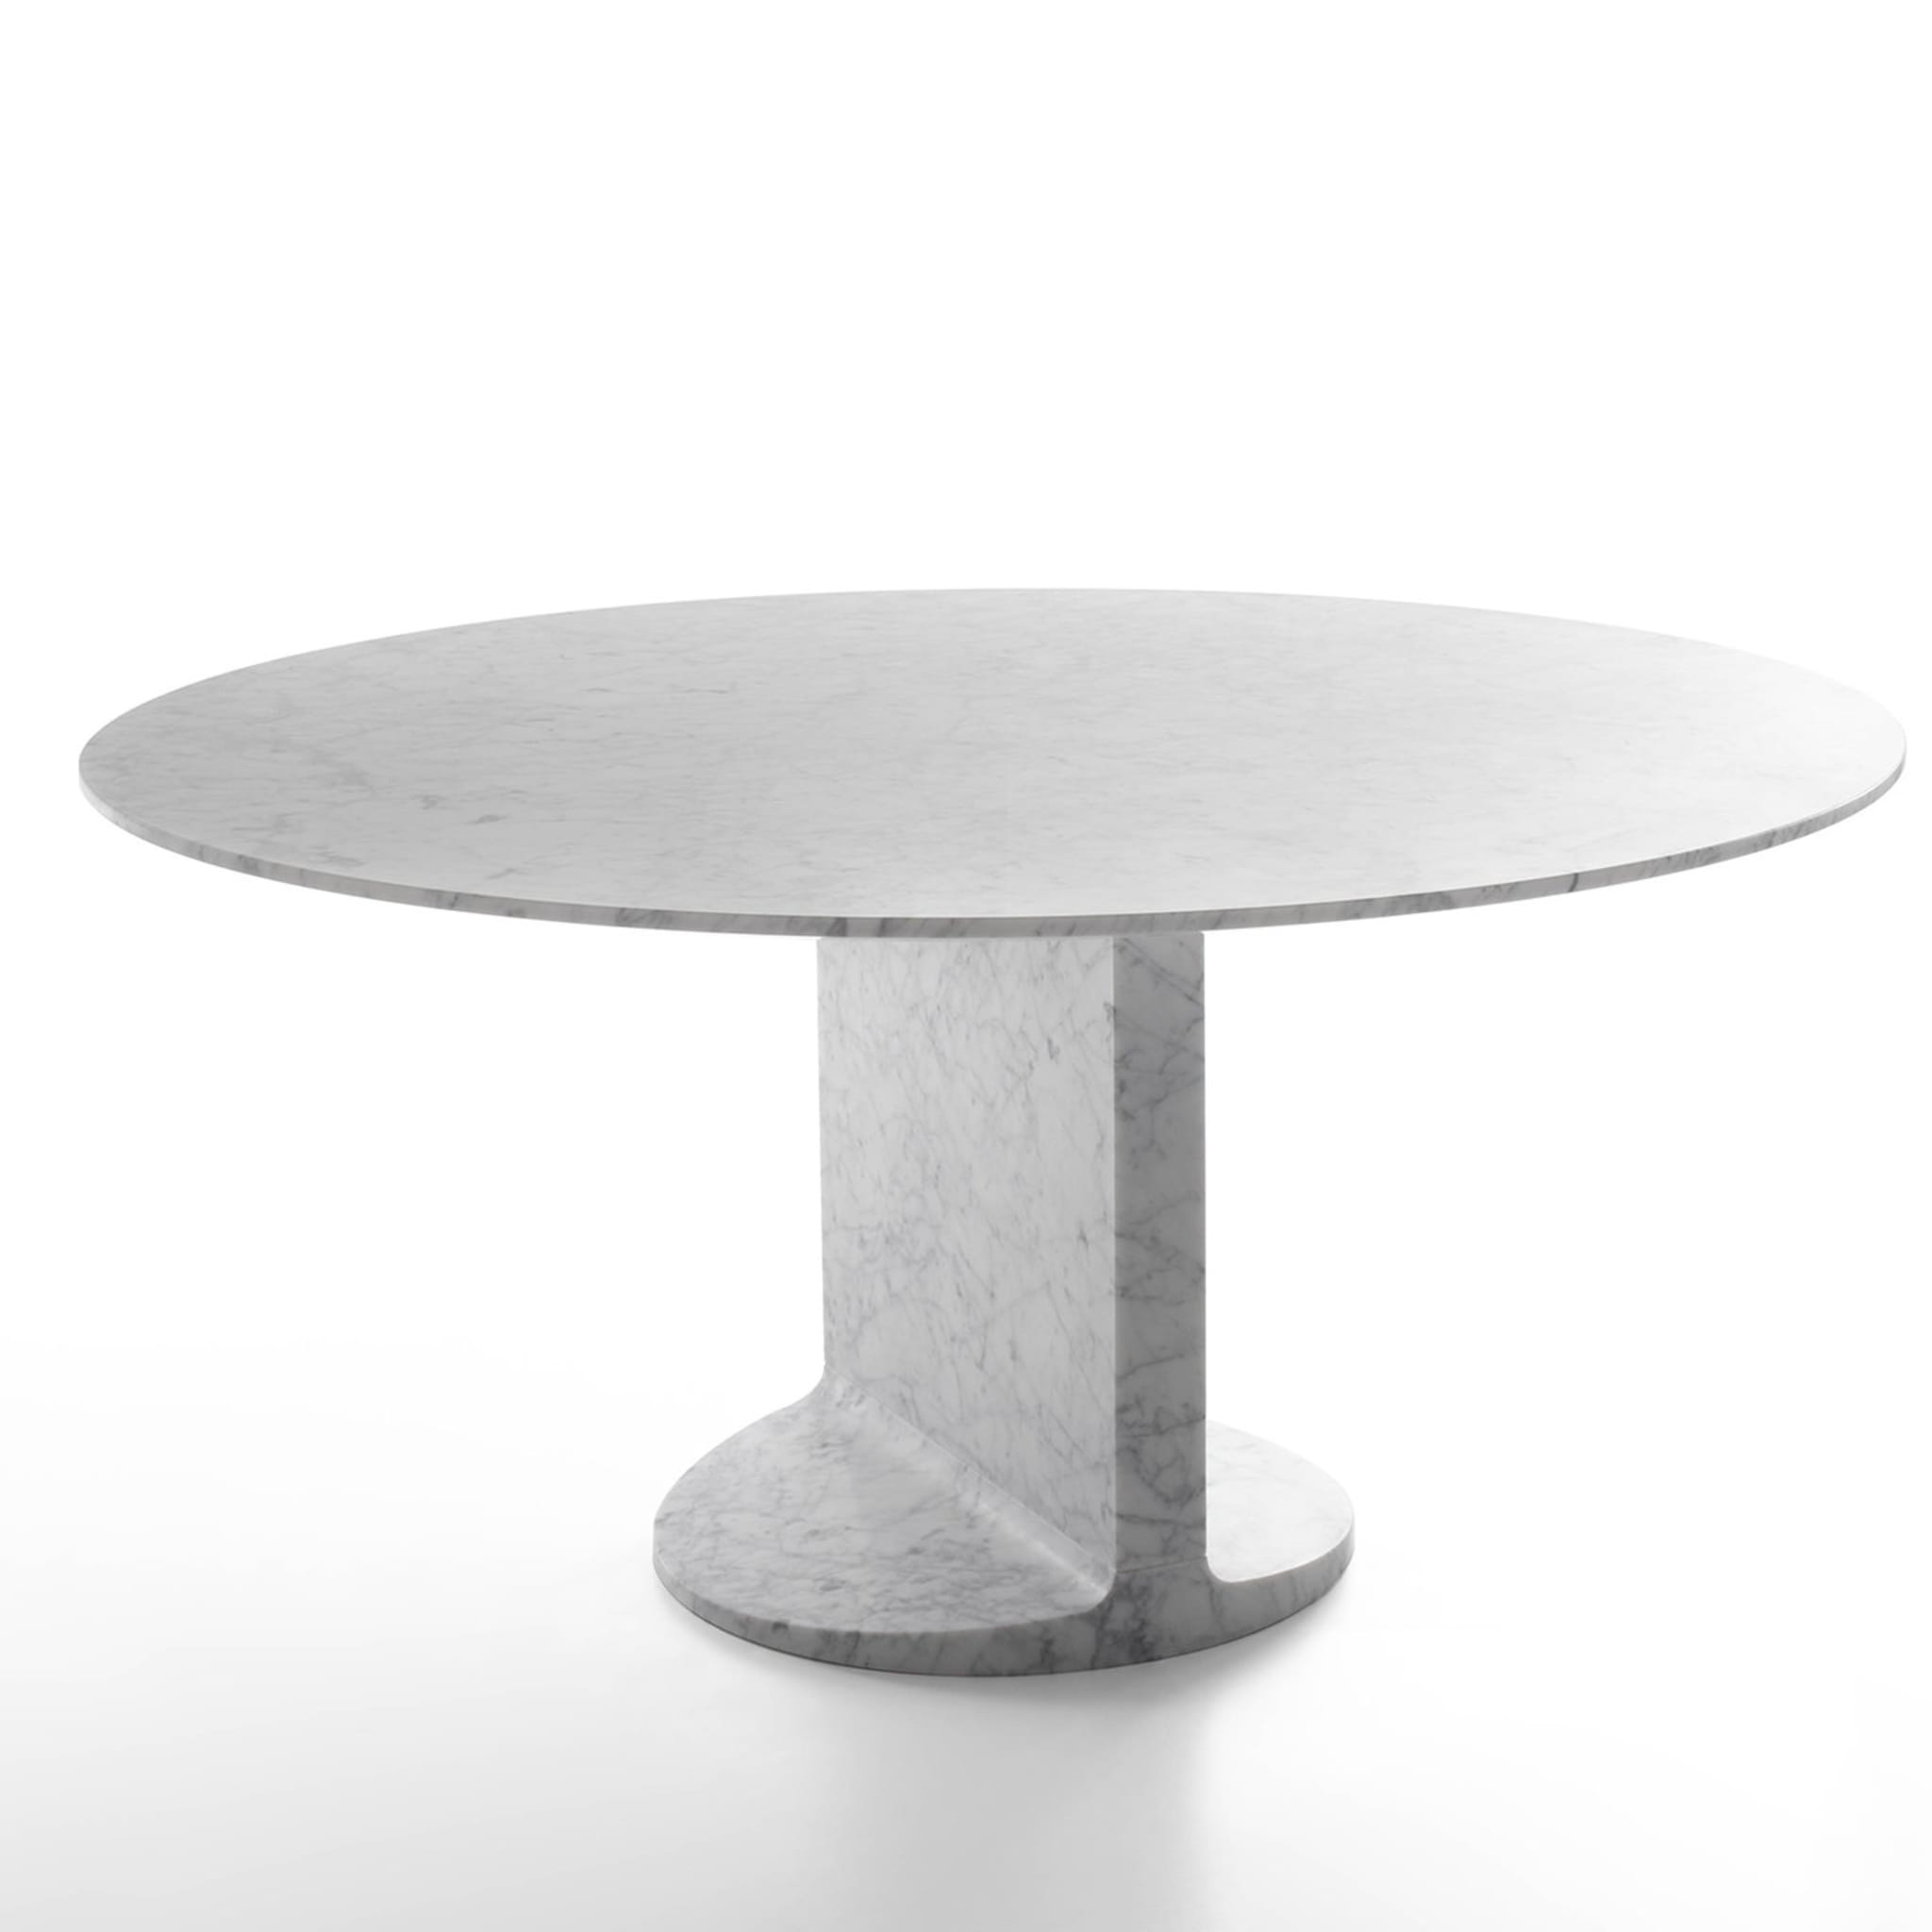 MIMMO DINING TABLE - Design James Irvine 2010 - Alternative view 1